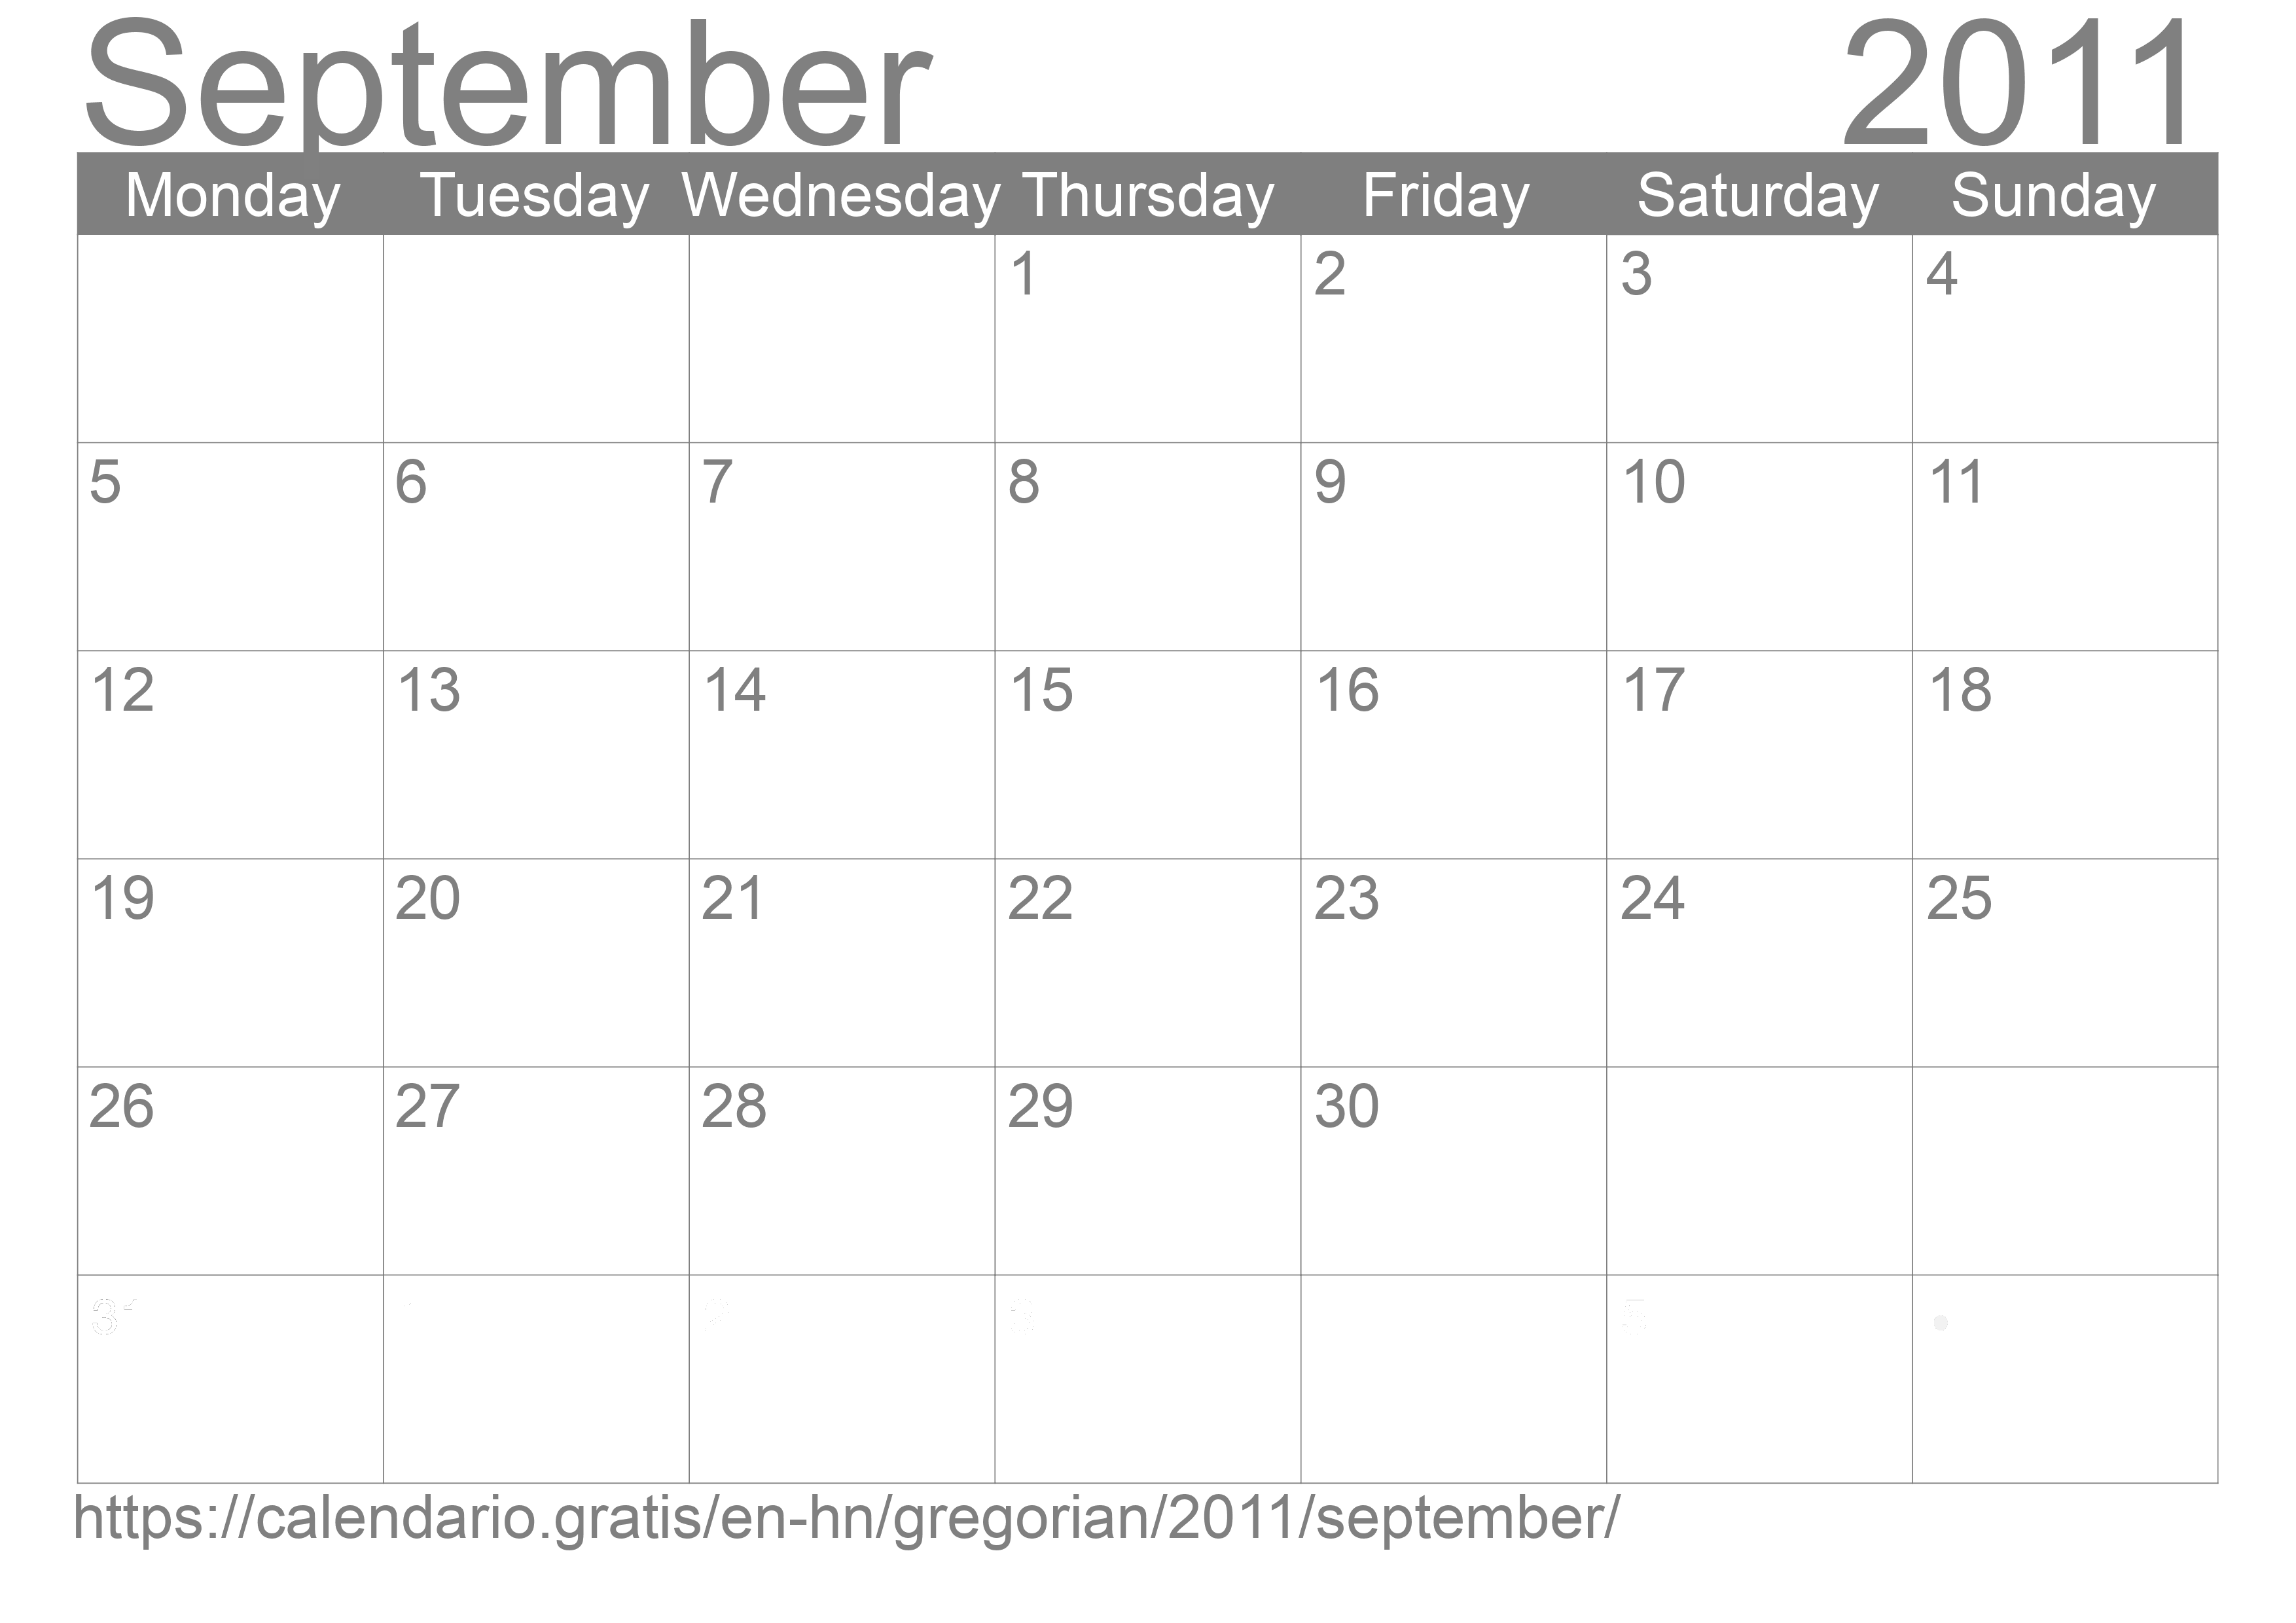 Calendar September 2011 to print